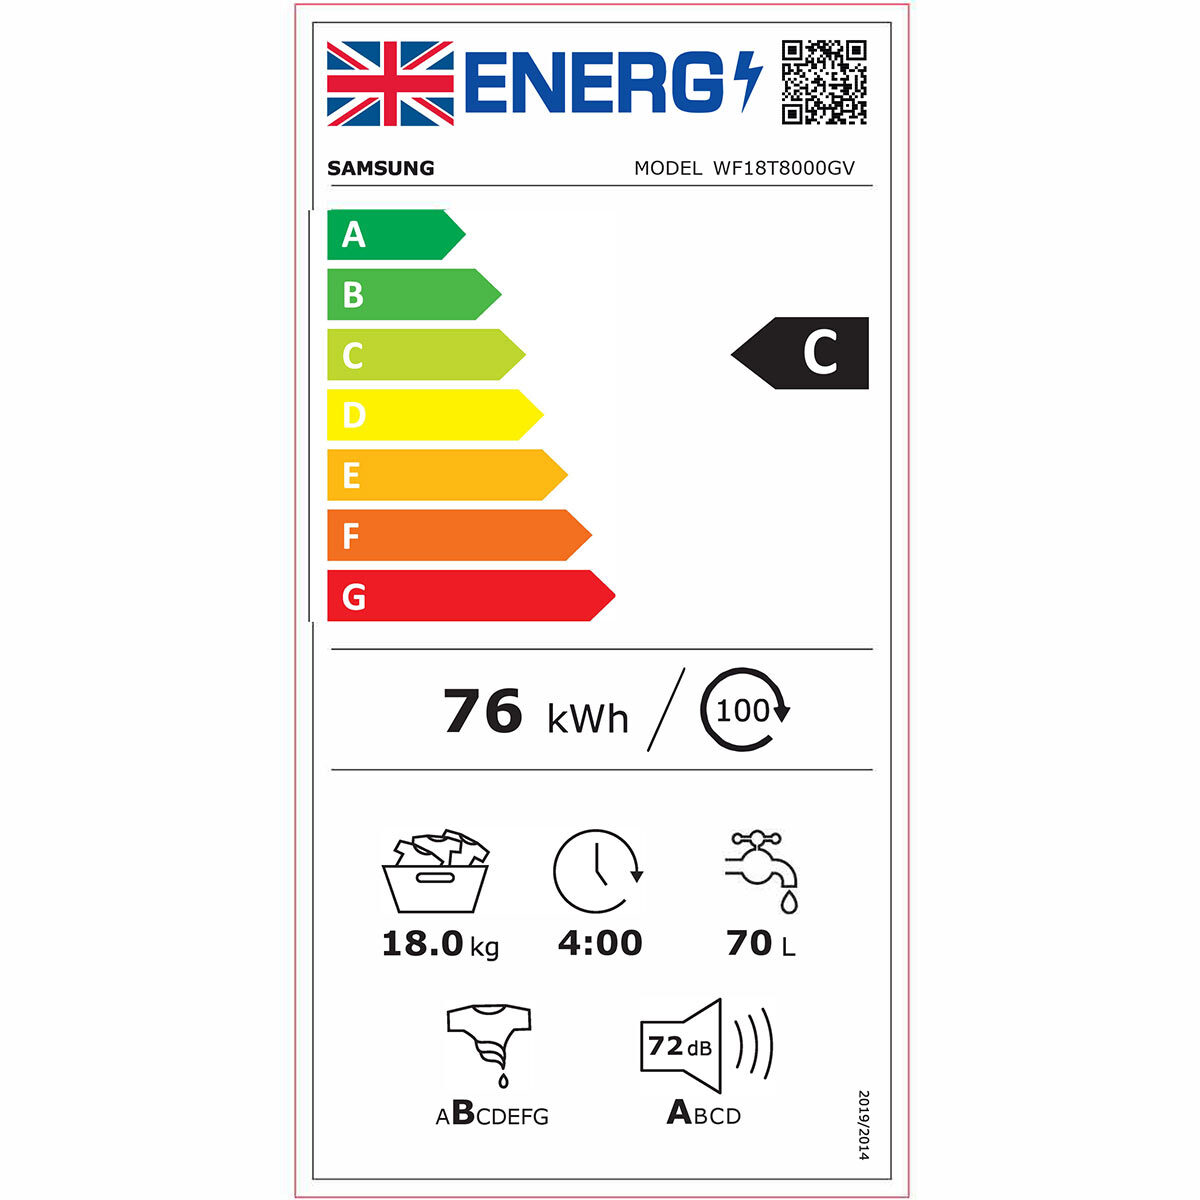 Energy Label for Samsung WF18T8000GV Washing Machine